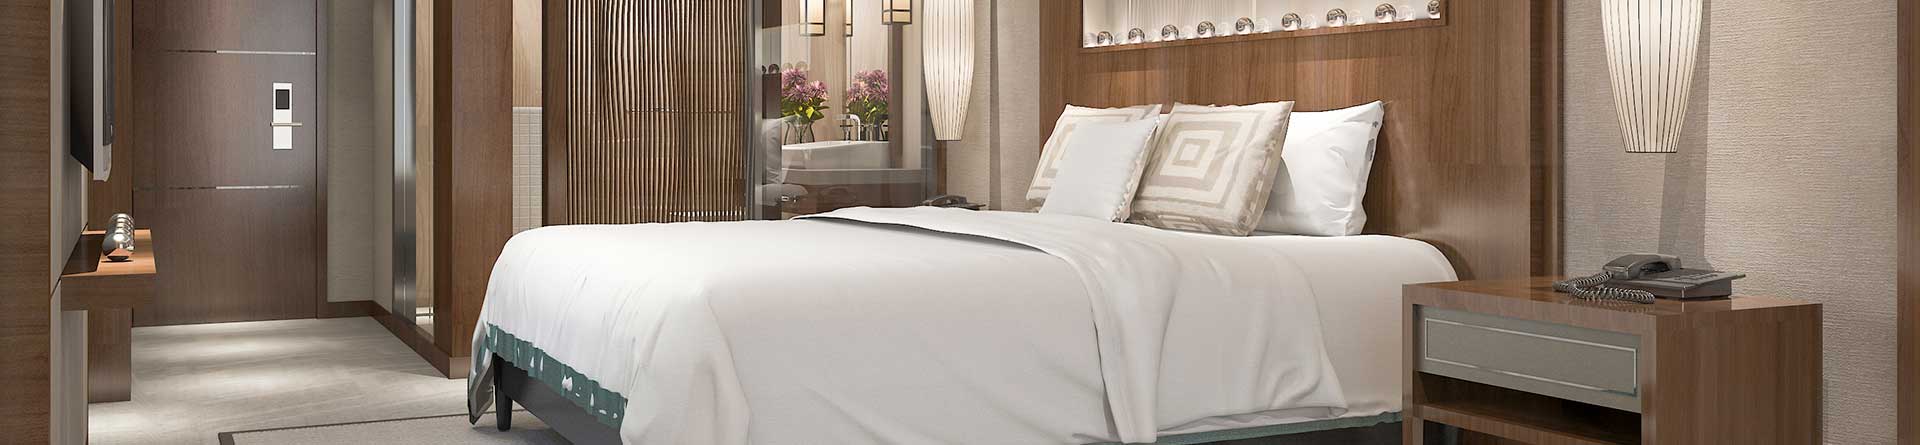 Private Label Bedding - Supreme Quality Control - Private Label Memory Foam Pillows - Private Label Bed Sheet Sets - Danican Bedding